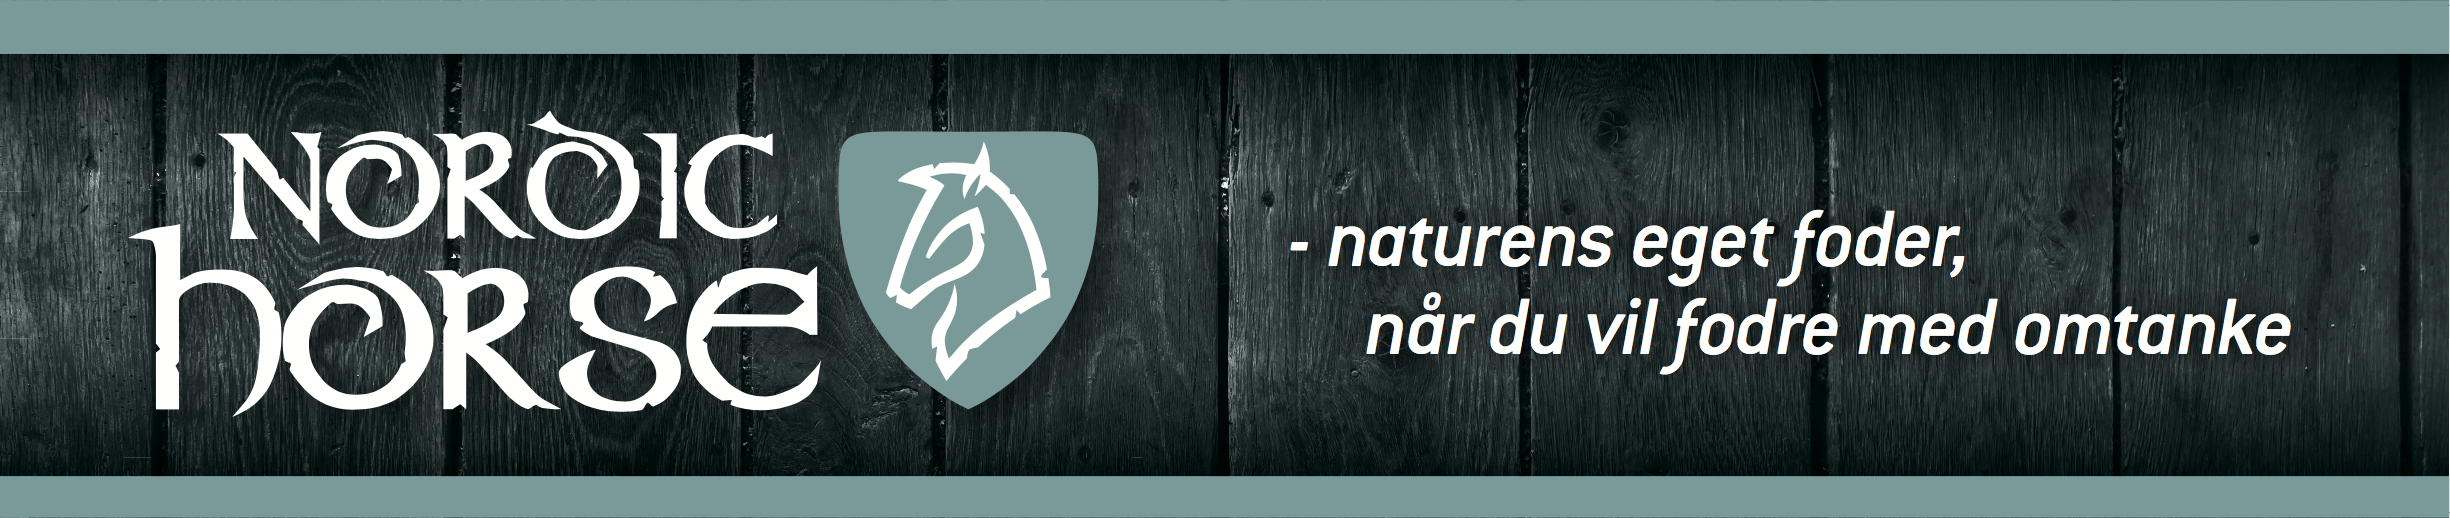 Nordic Horse Banner